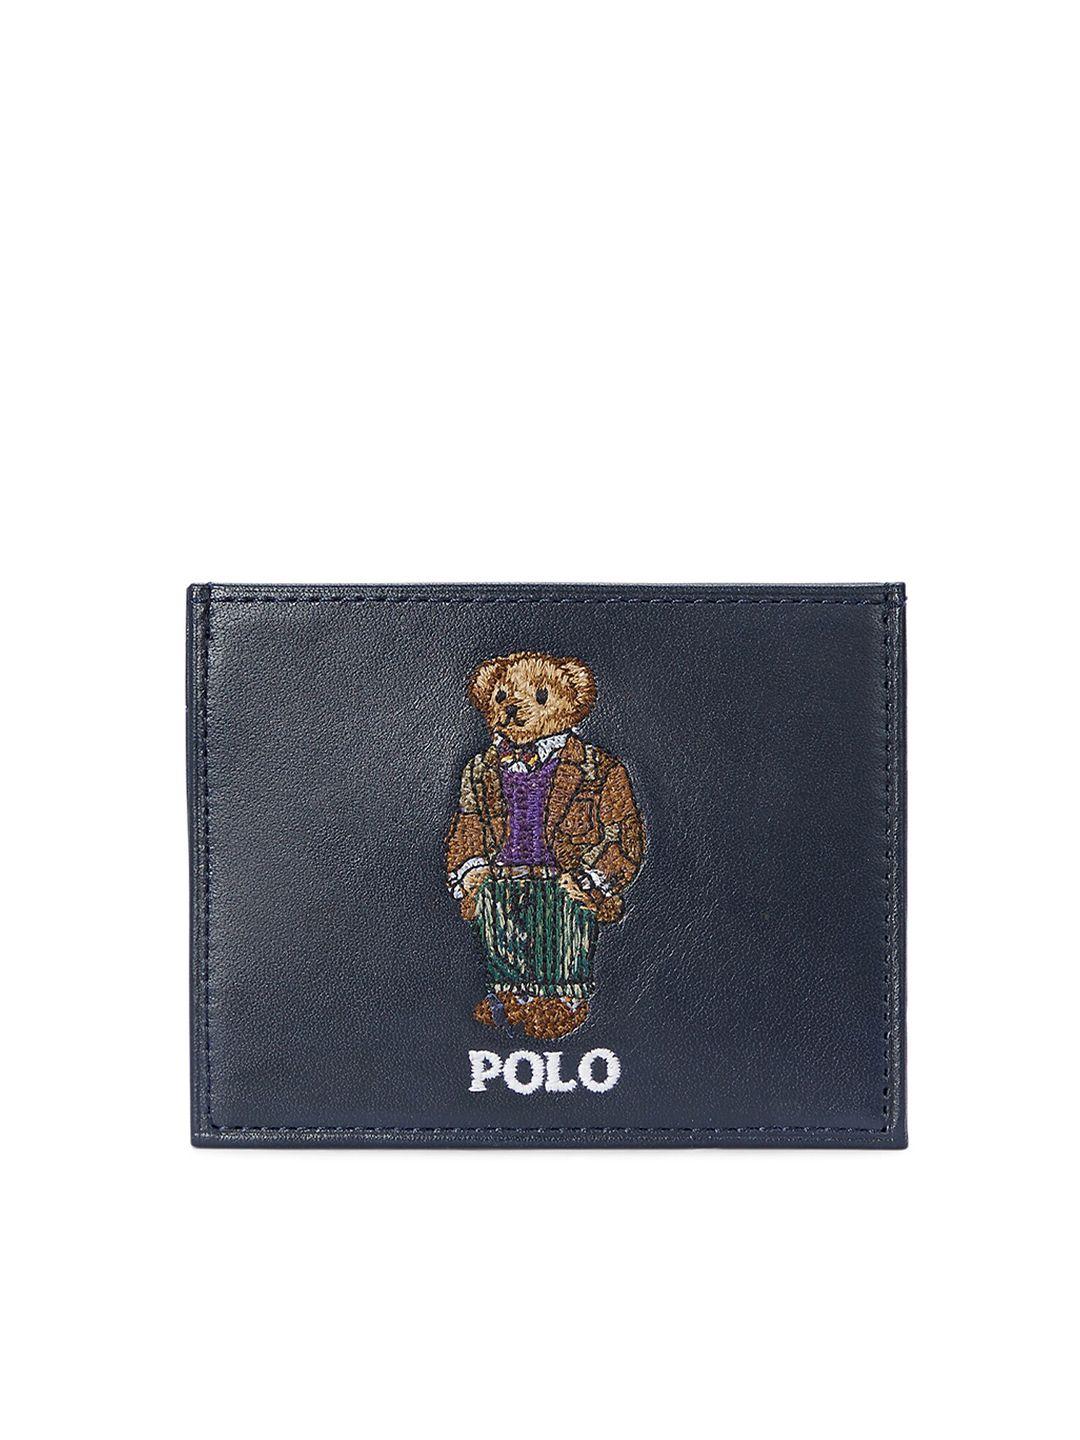 Polo Ralph Lauren Leather Card Case